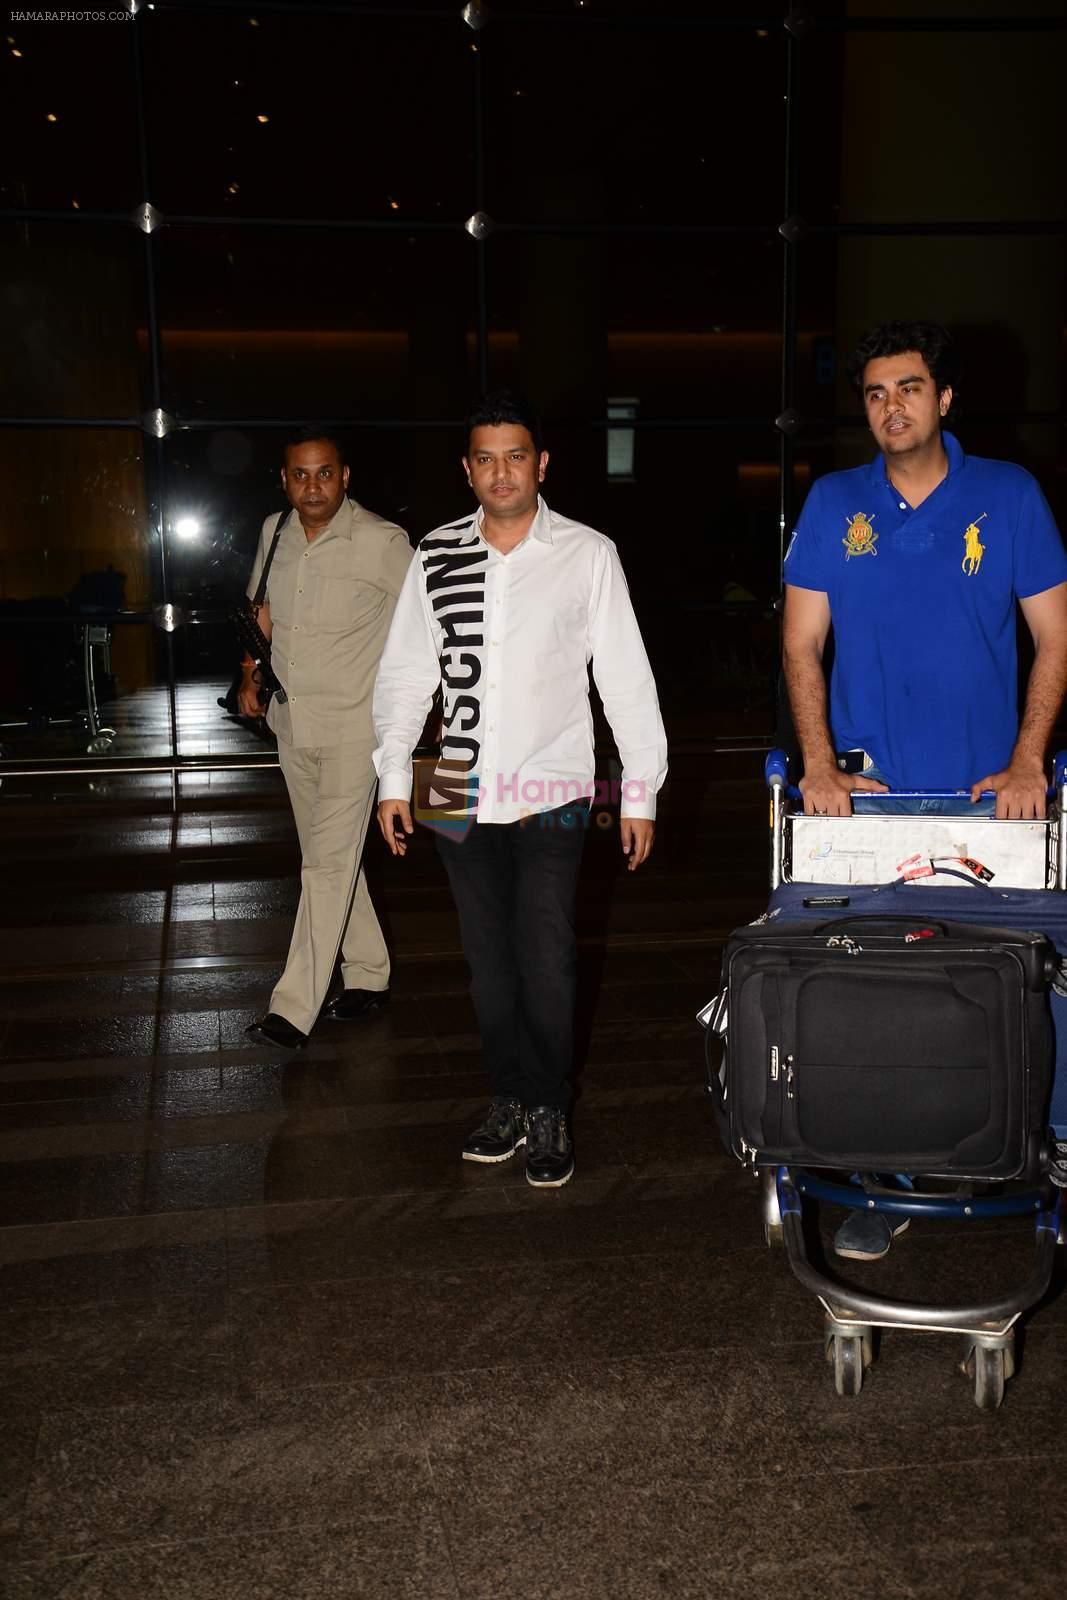 Bhushan Kumar arrive from Turkey in Mumbai on 7th July 2015